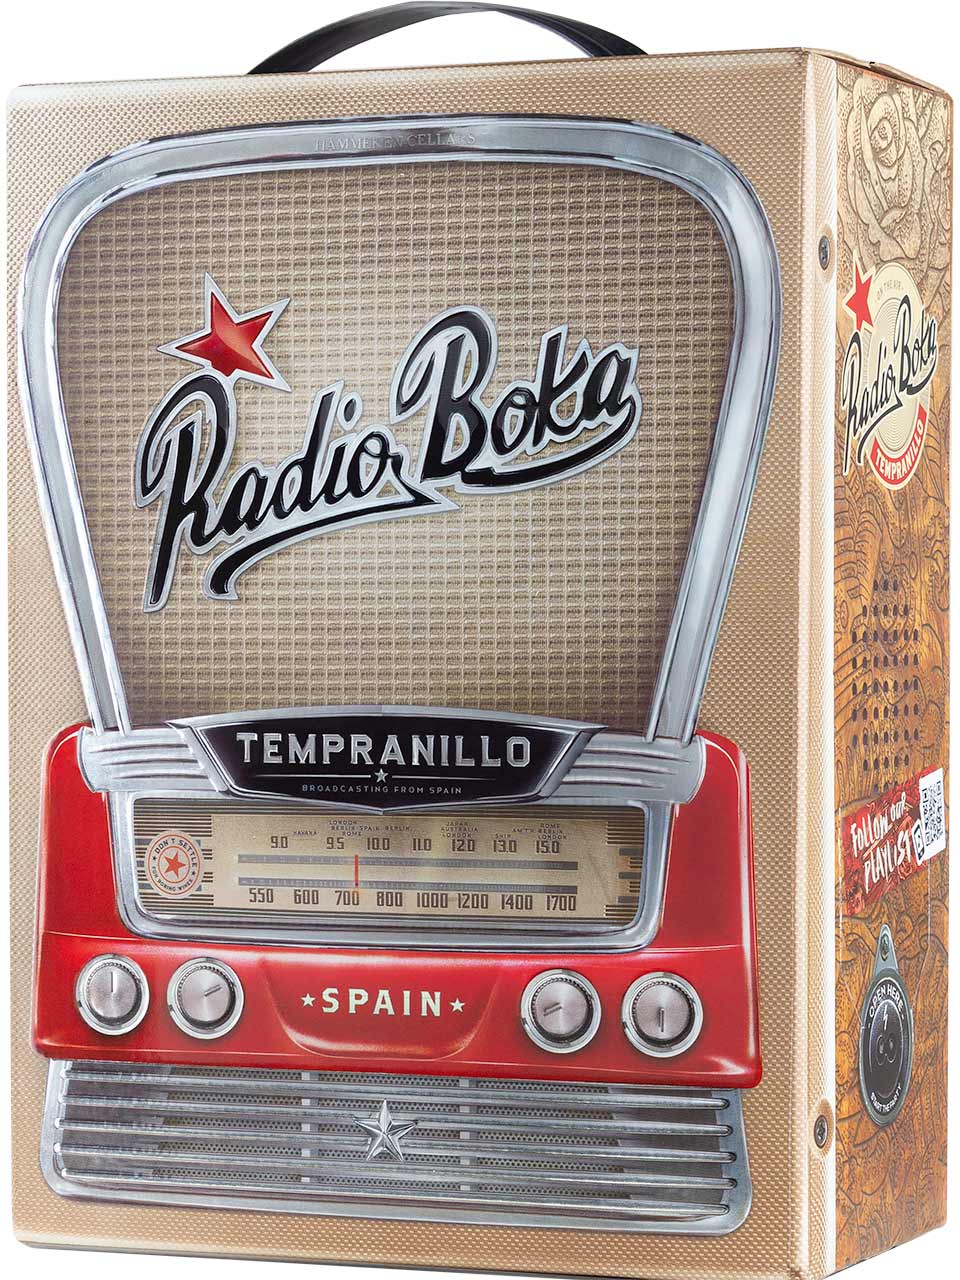 Radio Boka Tempranillo